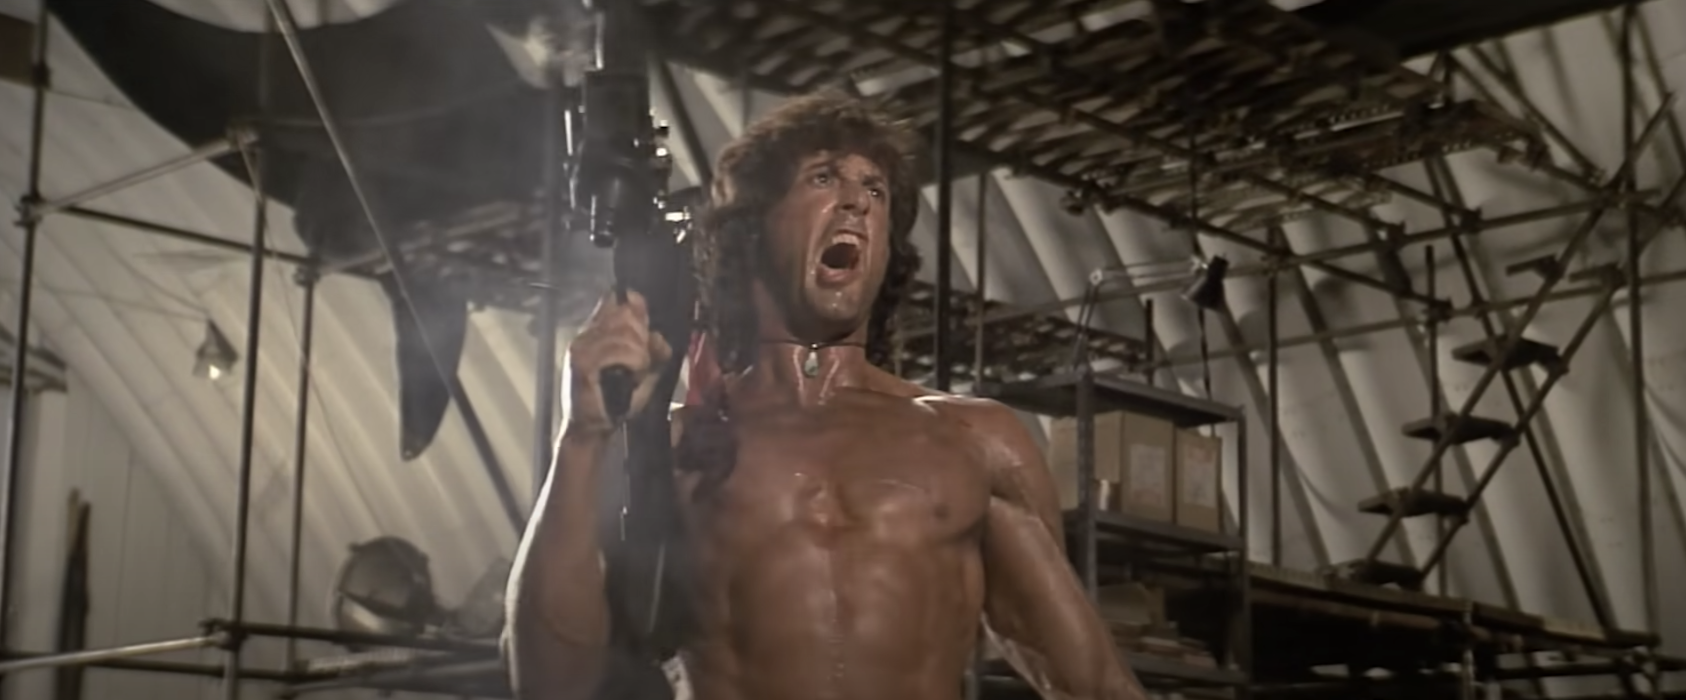 Rambo fires a machine gun in the air and screams